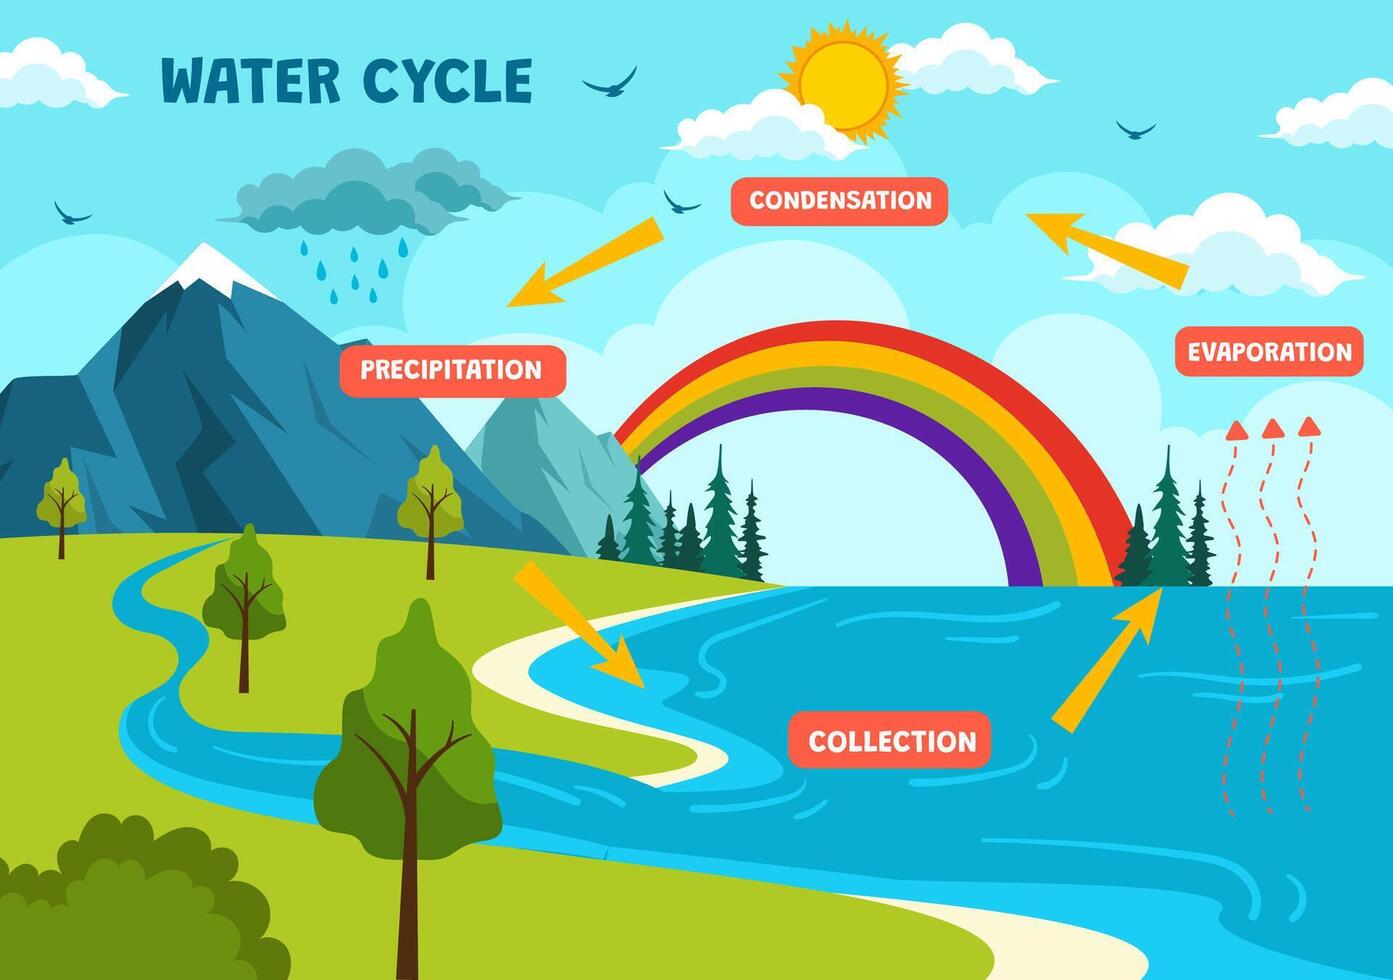 agua ciclo vector ilustración con evaporación, condensación, precipitación a colección en tierra natural ambiente en plano dibujos animados antecedentes